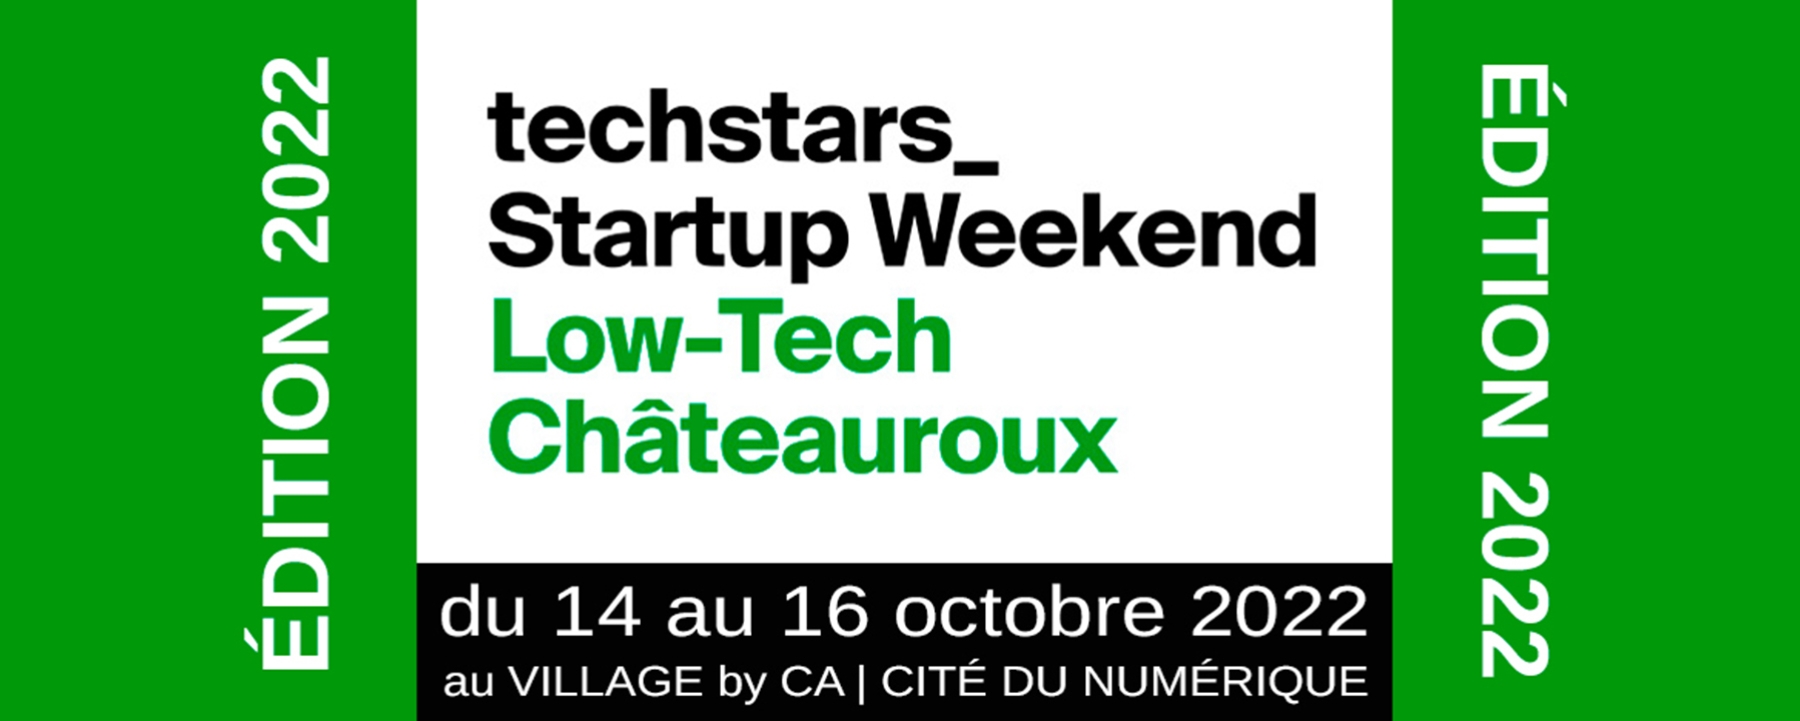 Startup Weekend - Châteauroux